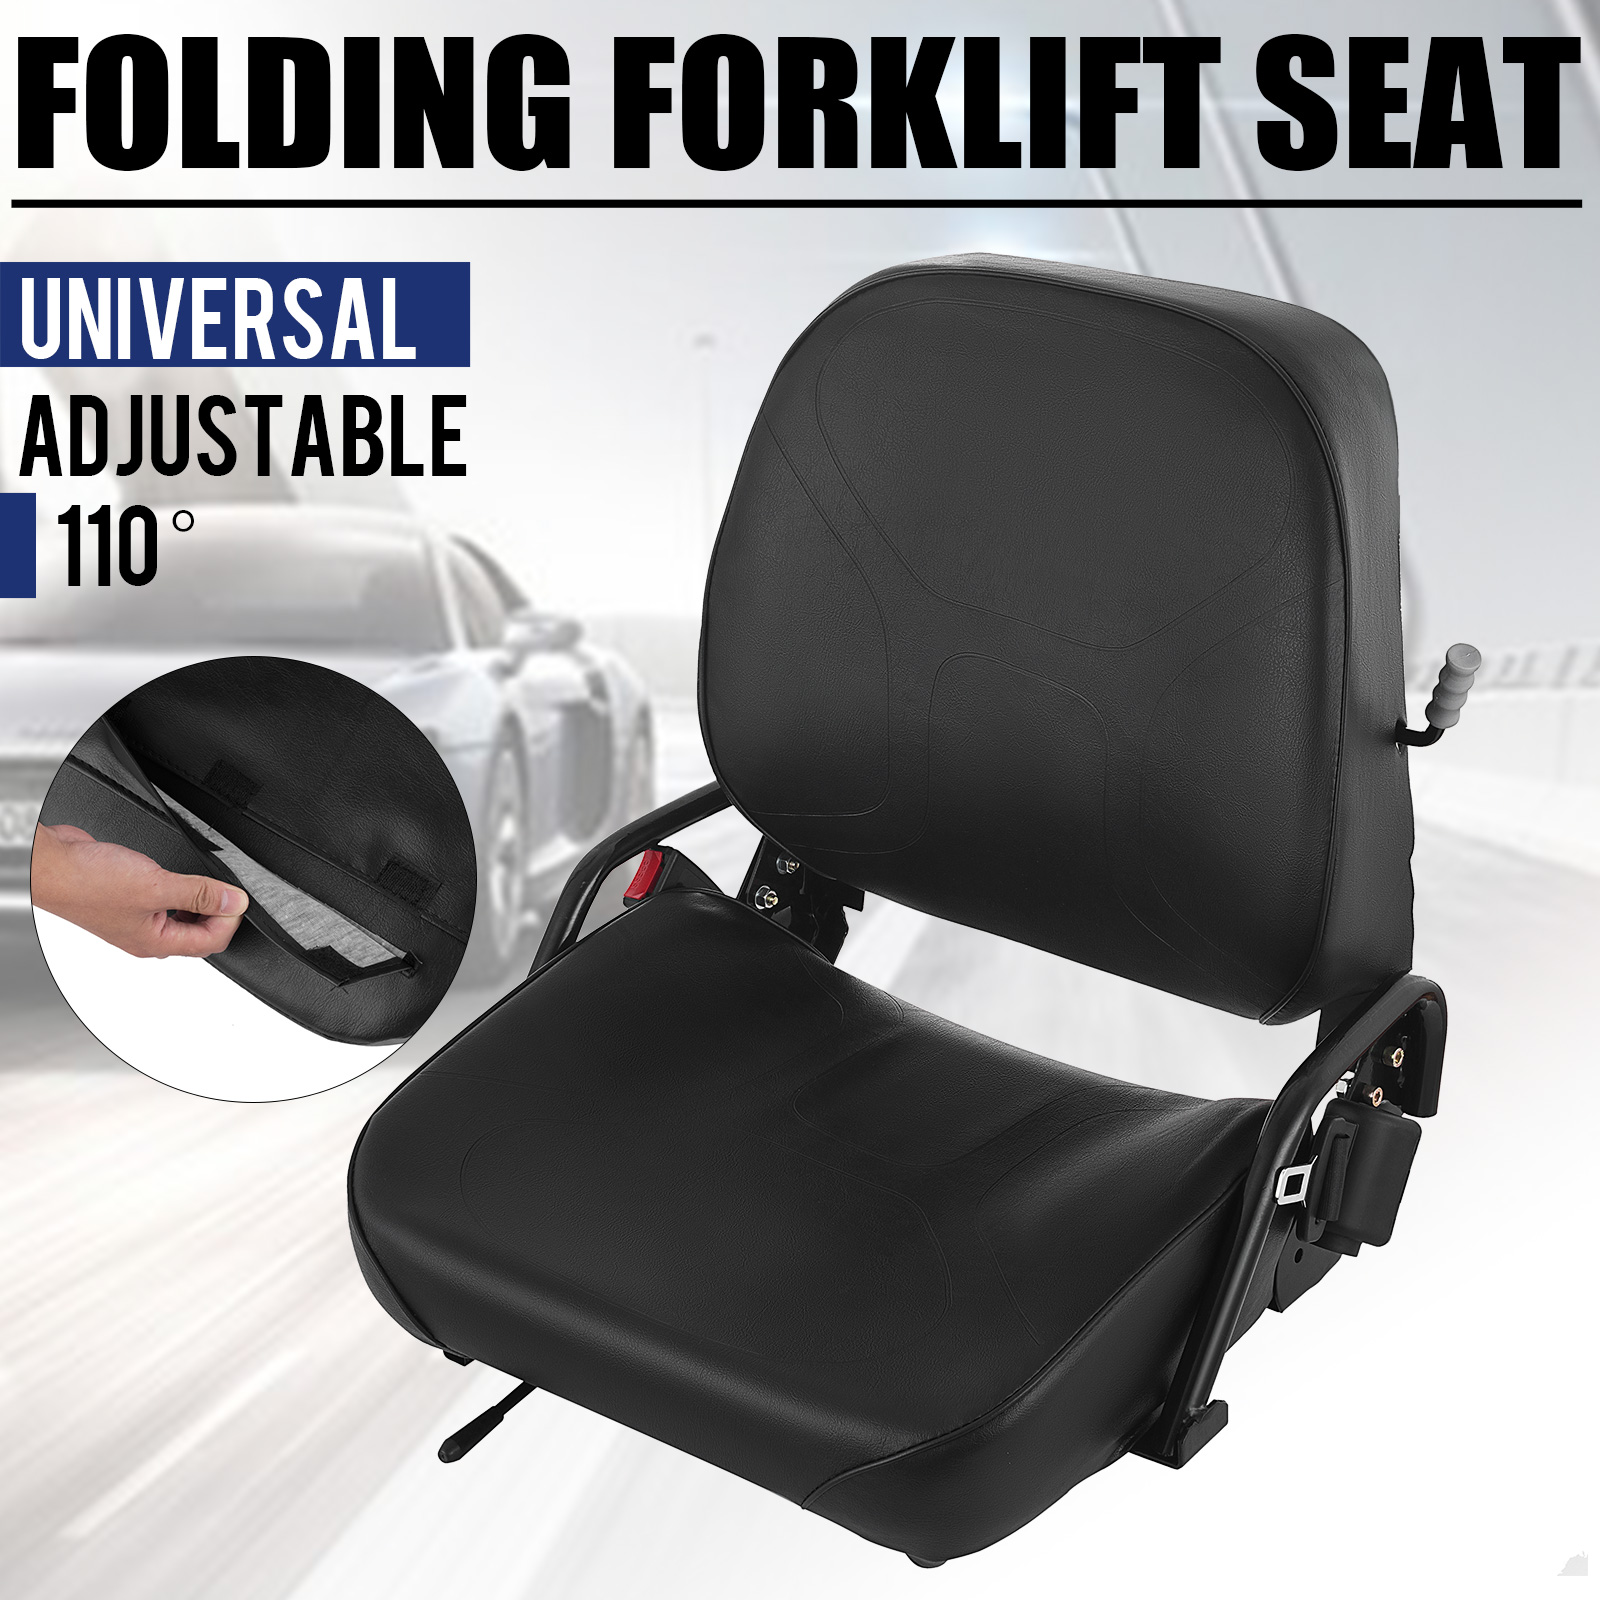 Universal Folding Forklift Seat Cat Clark Komatsu Nissan Yale Toyota Hyster New 208804433257 Ebay